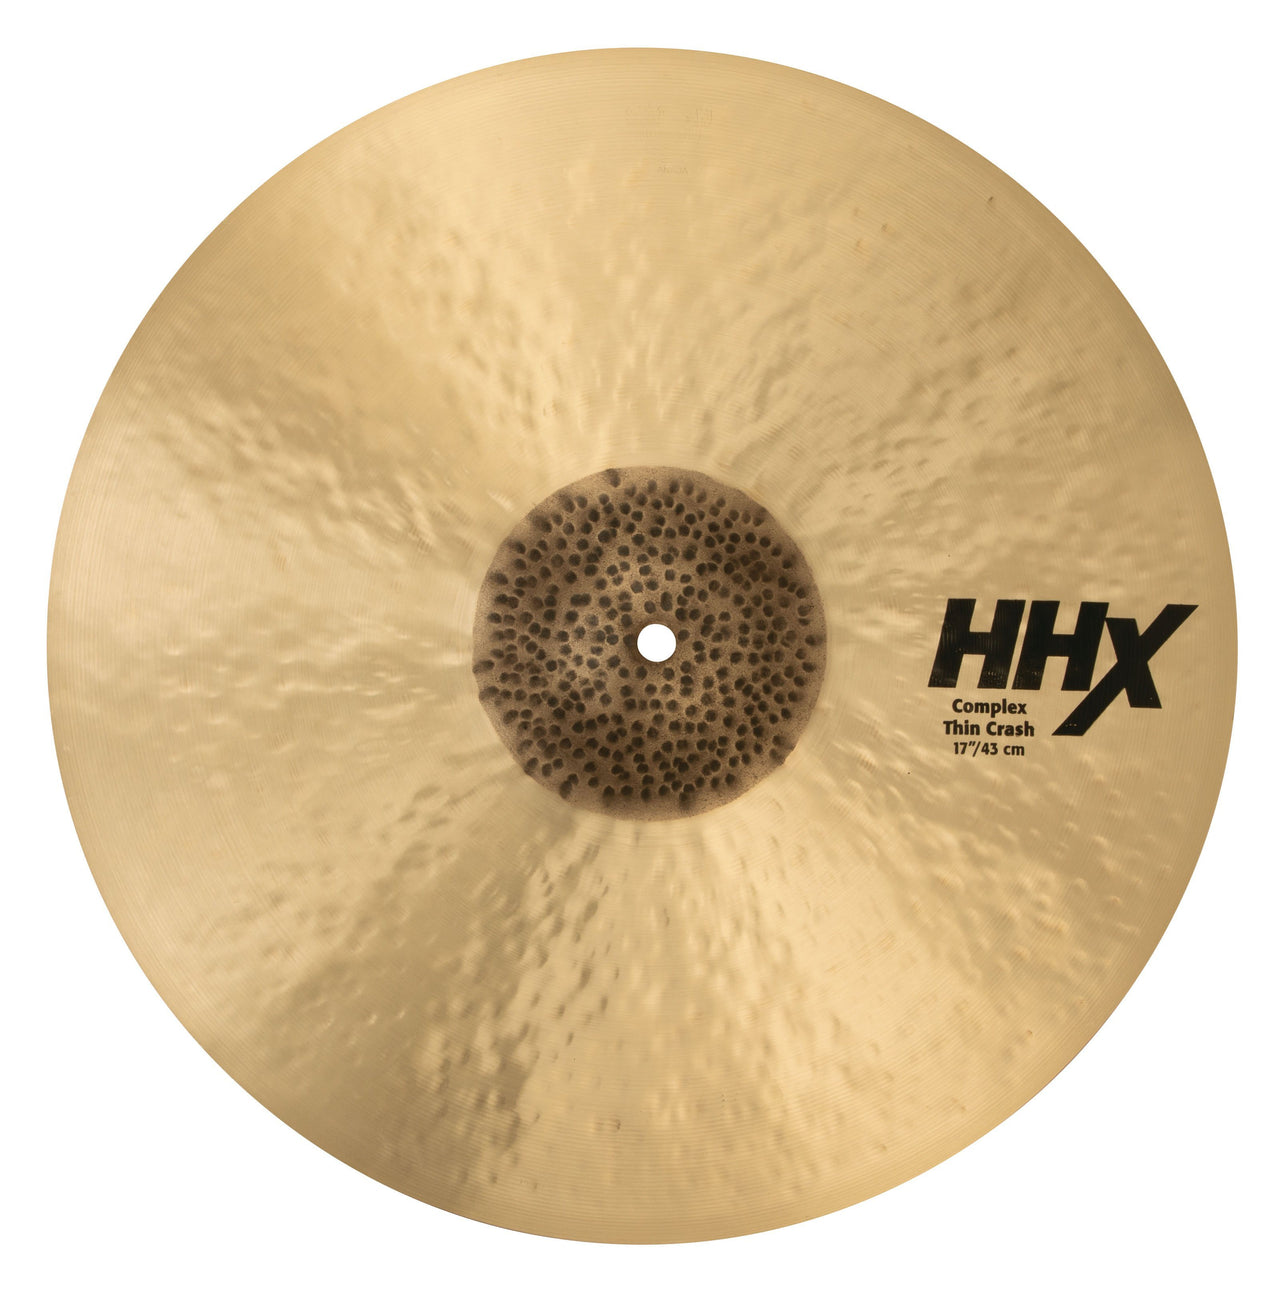 Sabian 17” HHX Complex Thin Crash - New drum kit SABIAN 